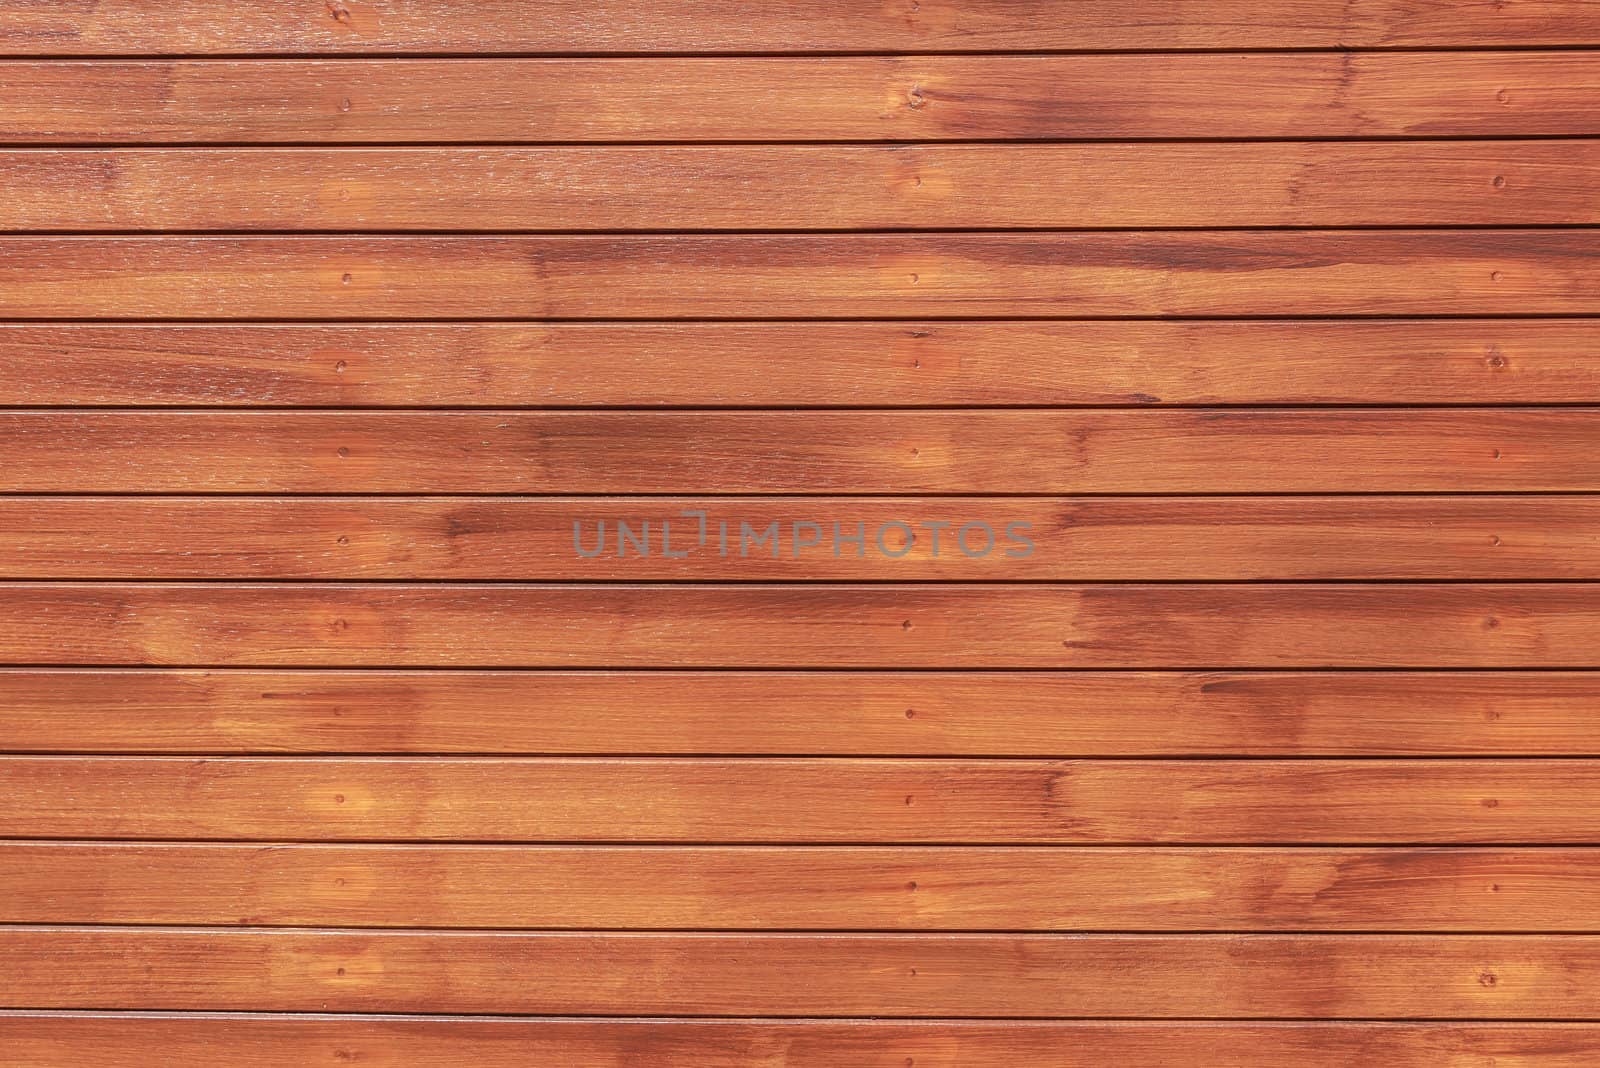 Natural Wood Background, Horizontal Pattern by punpleng